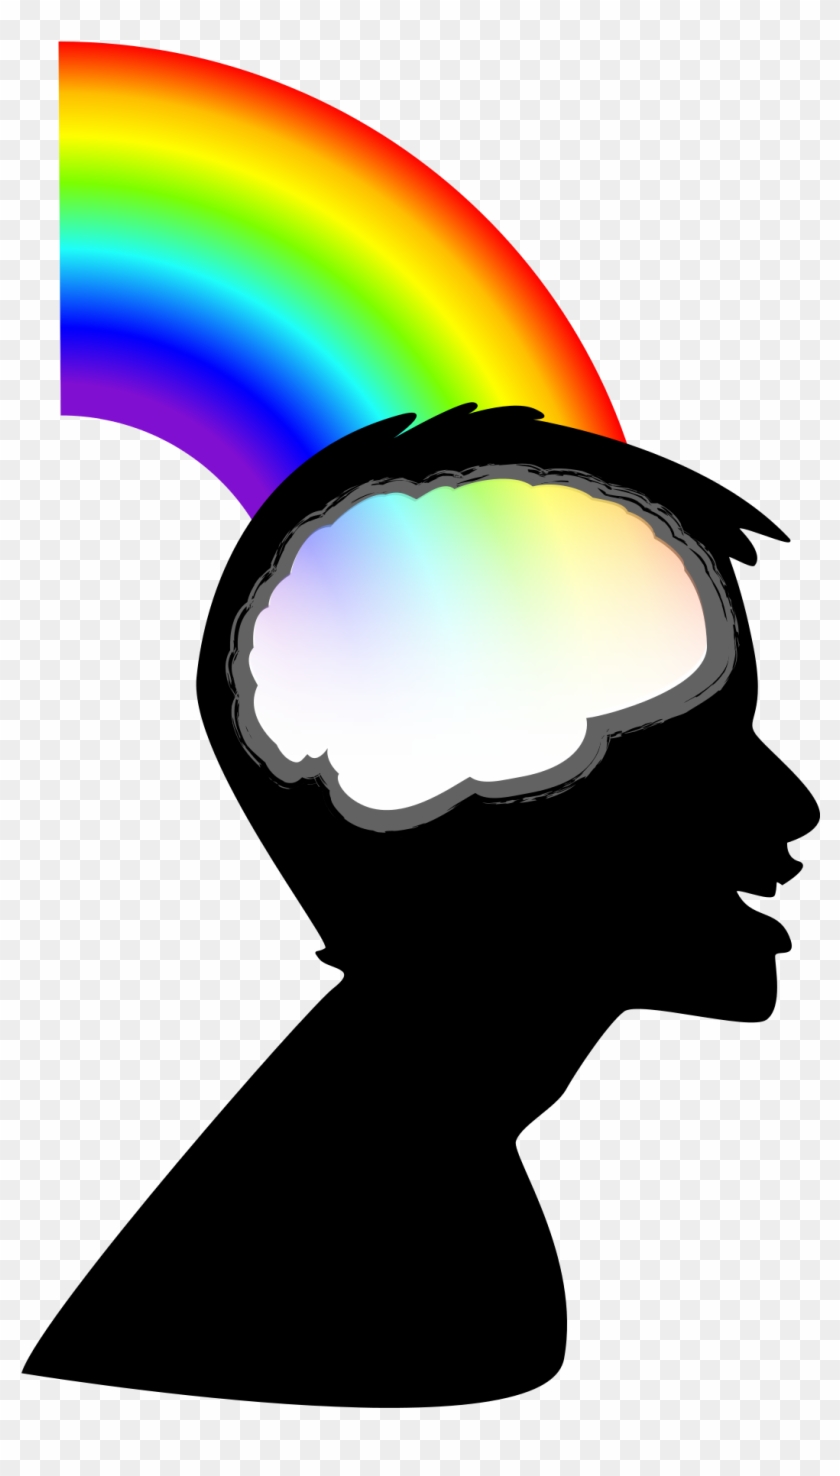 File - Rainbow Brain - Svg - Biological Perspective #164324